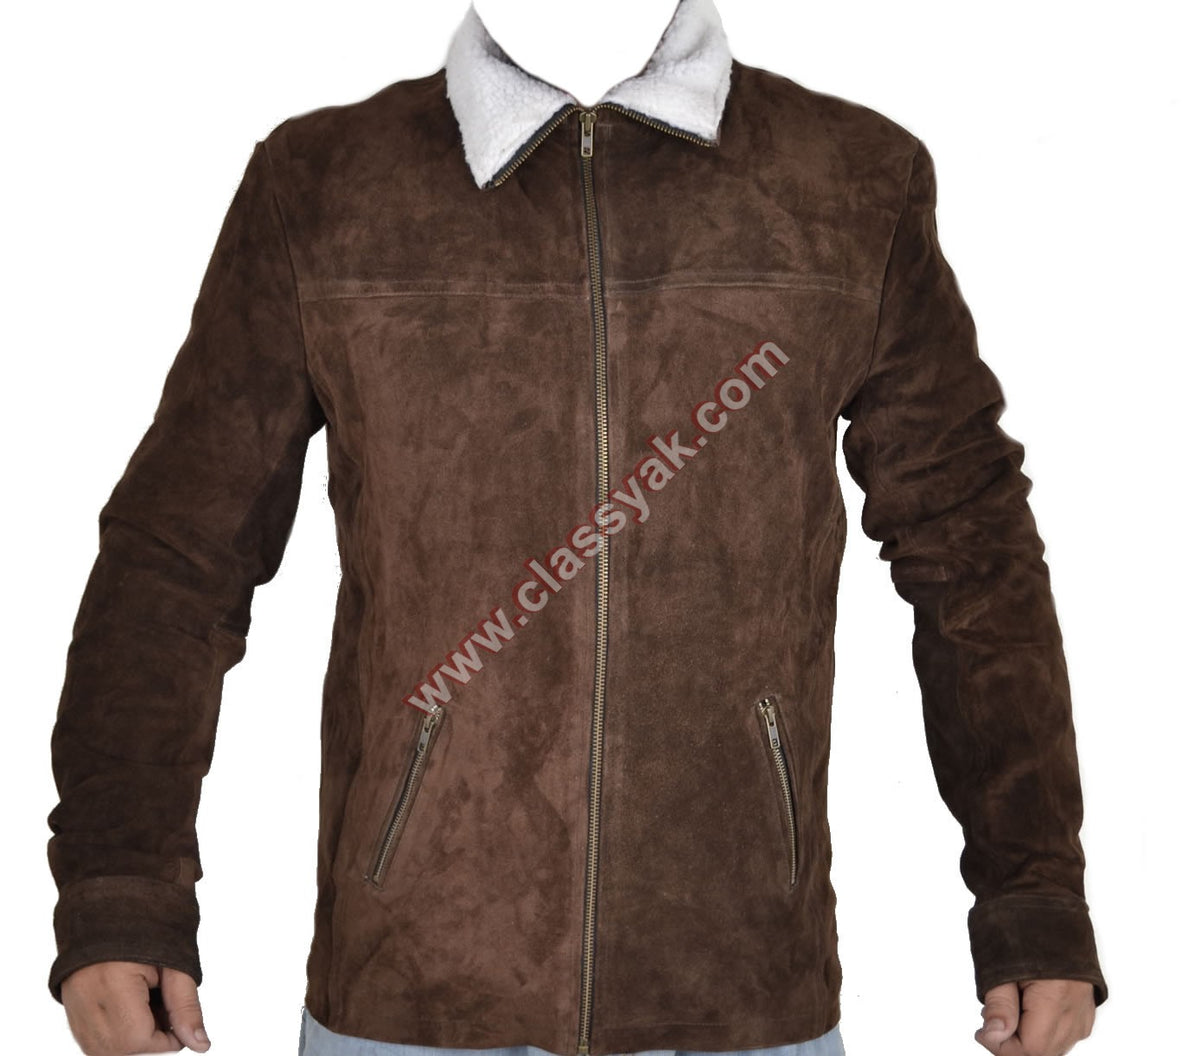 Classyak Walking Dead Series Rick Grimes Suede Leather Jacket, Xs-5xl